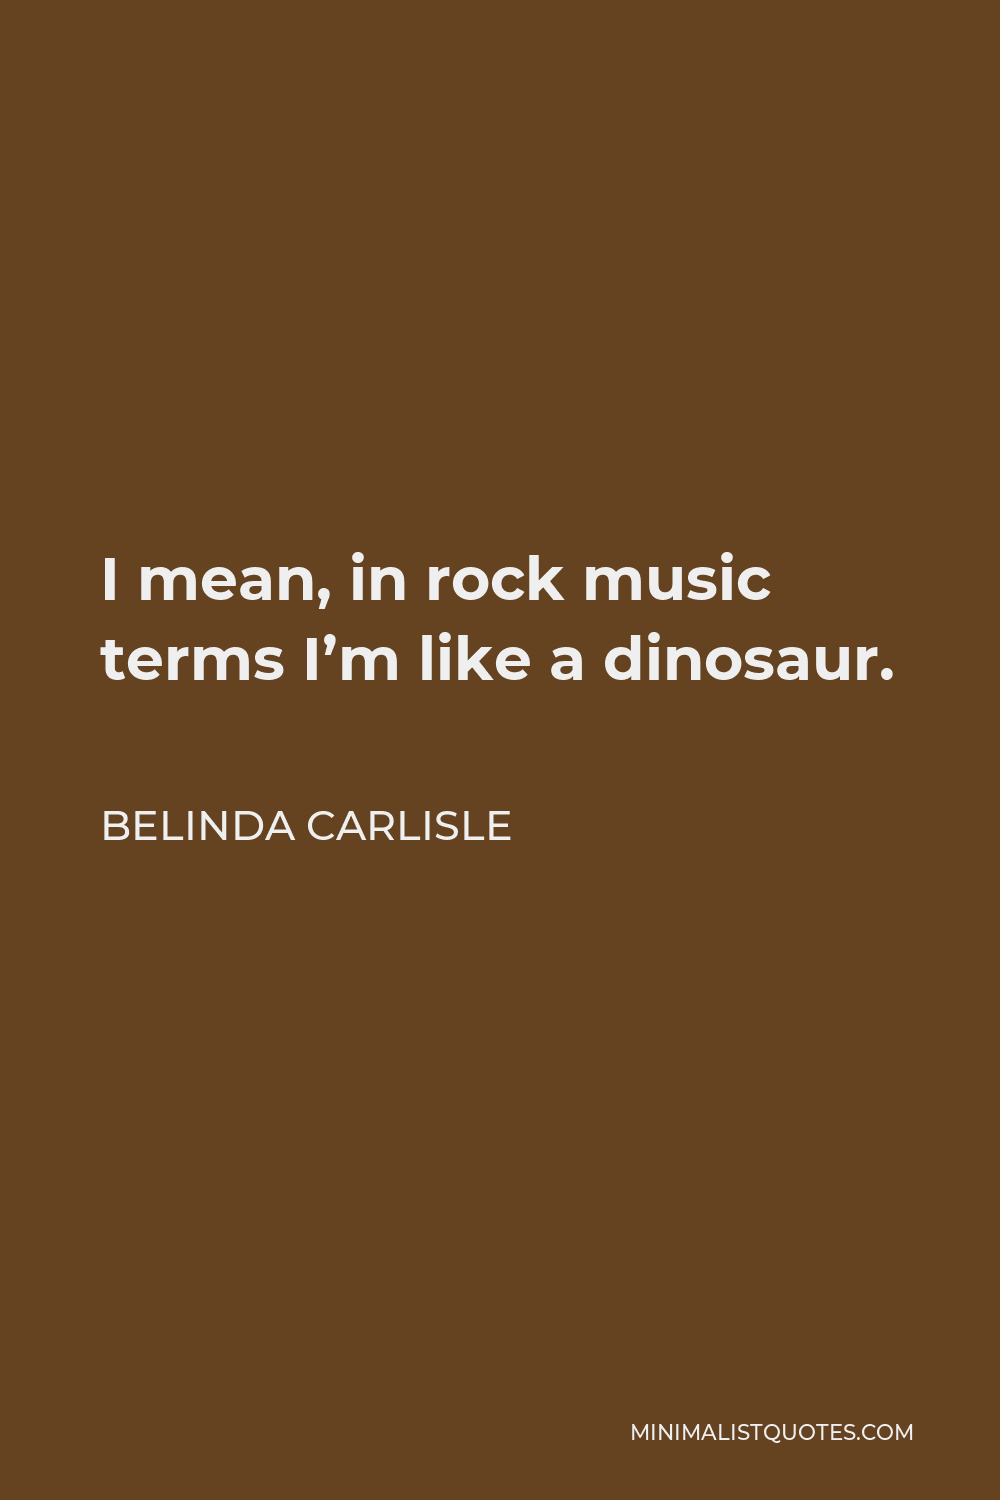 Belinda Carlisle Quote - I mean, in rock music terms I’m like a dinosaur.